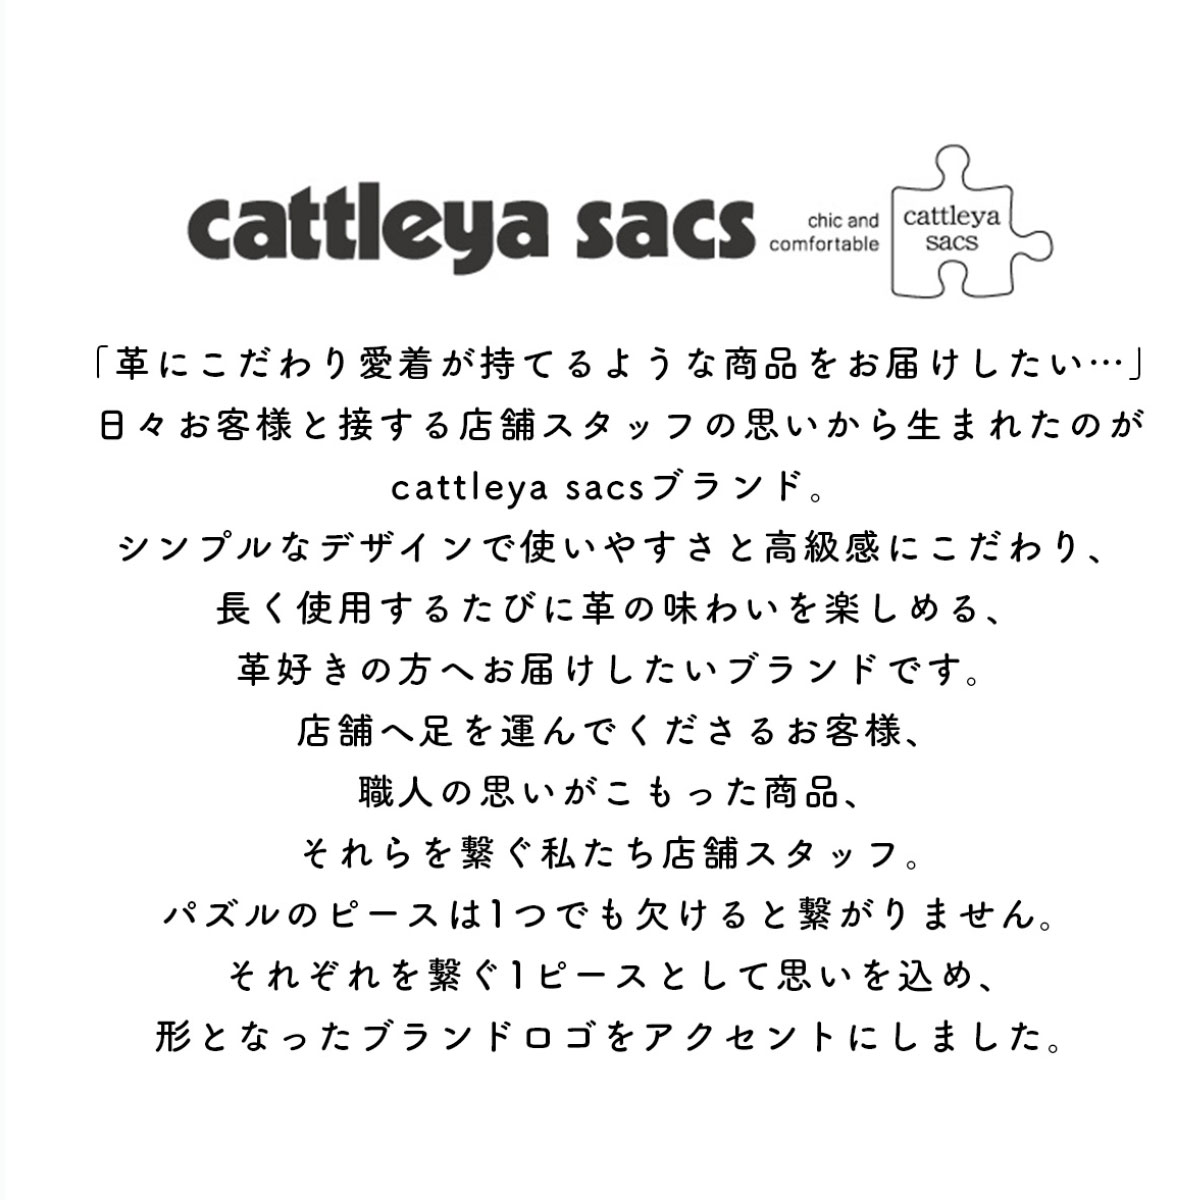 cattleya sacs(カトレアサックス)　バフレザー仕切りトートバッグSBP2122画像3